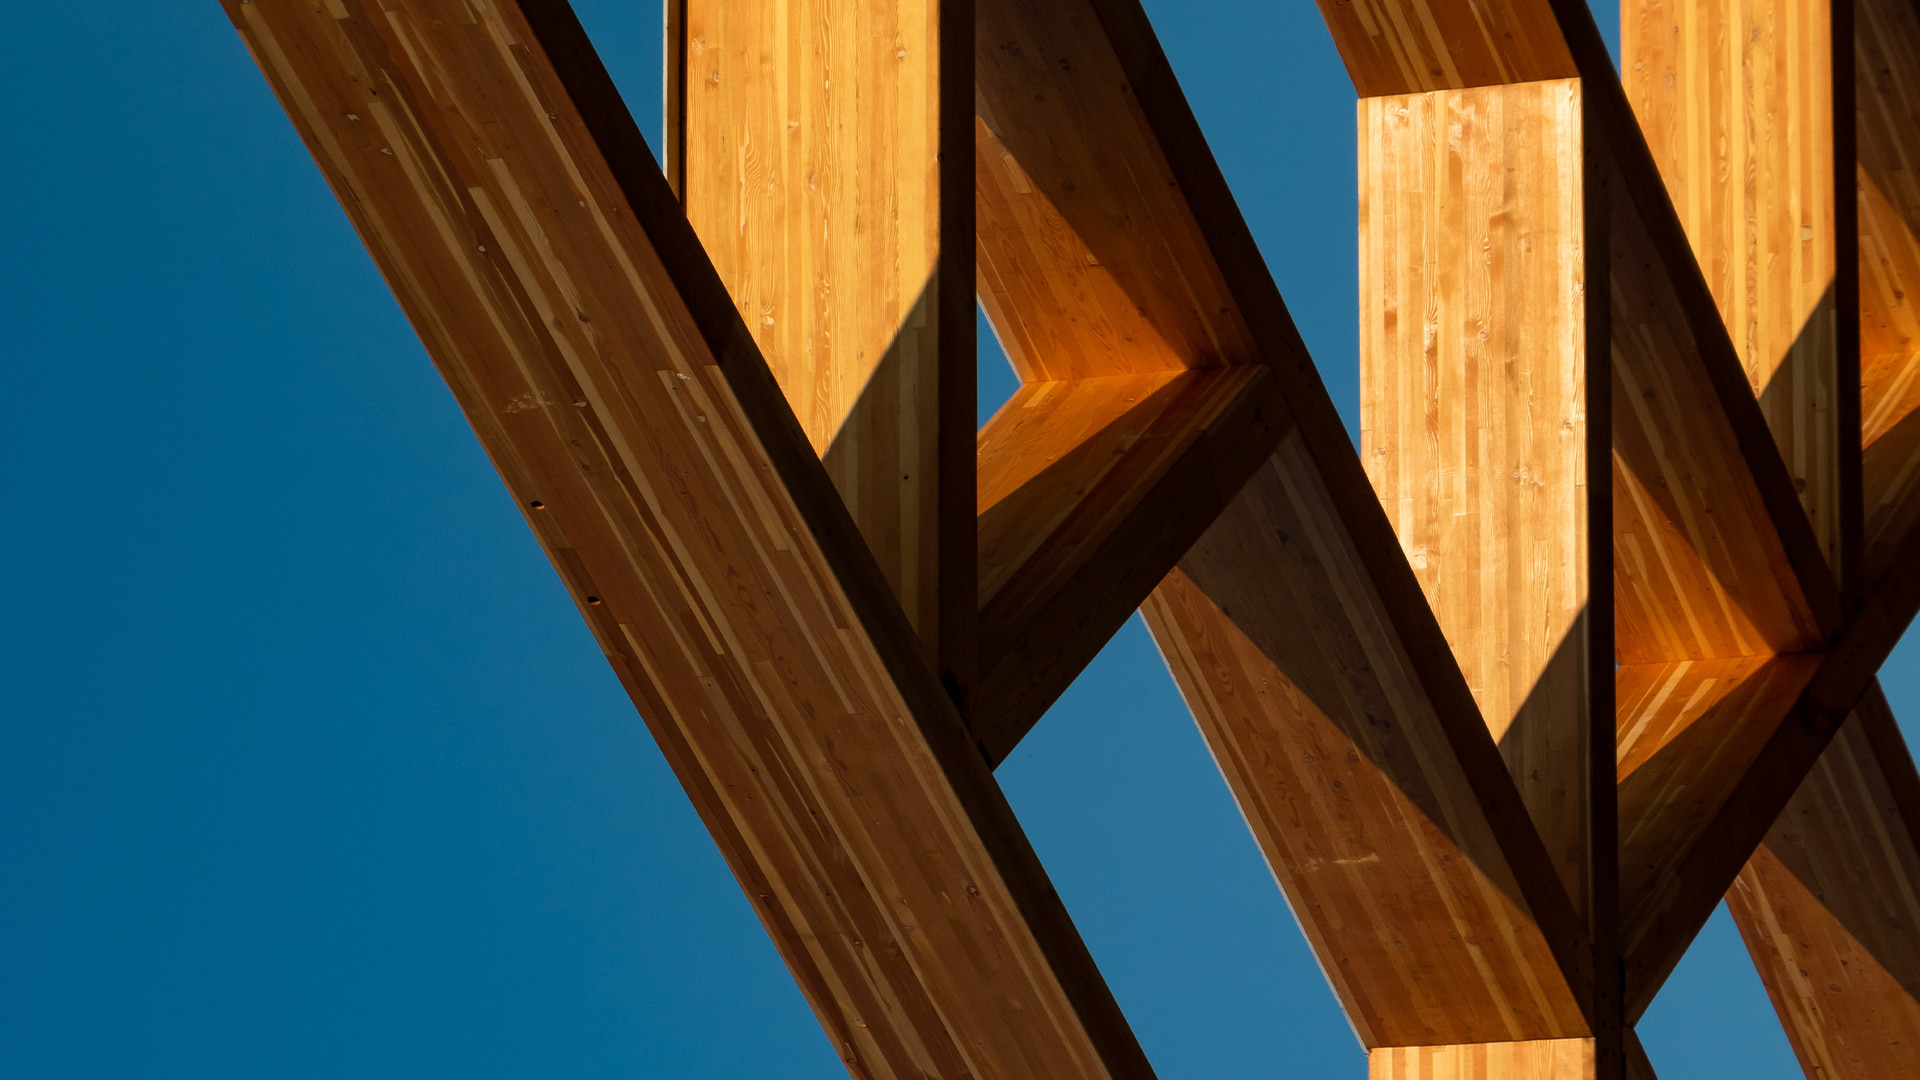 Rustic wood beams create a geometric pattern.